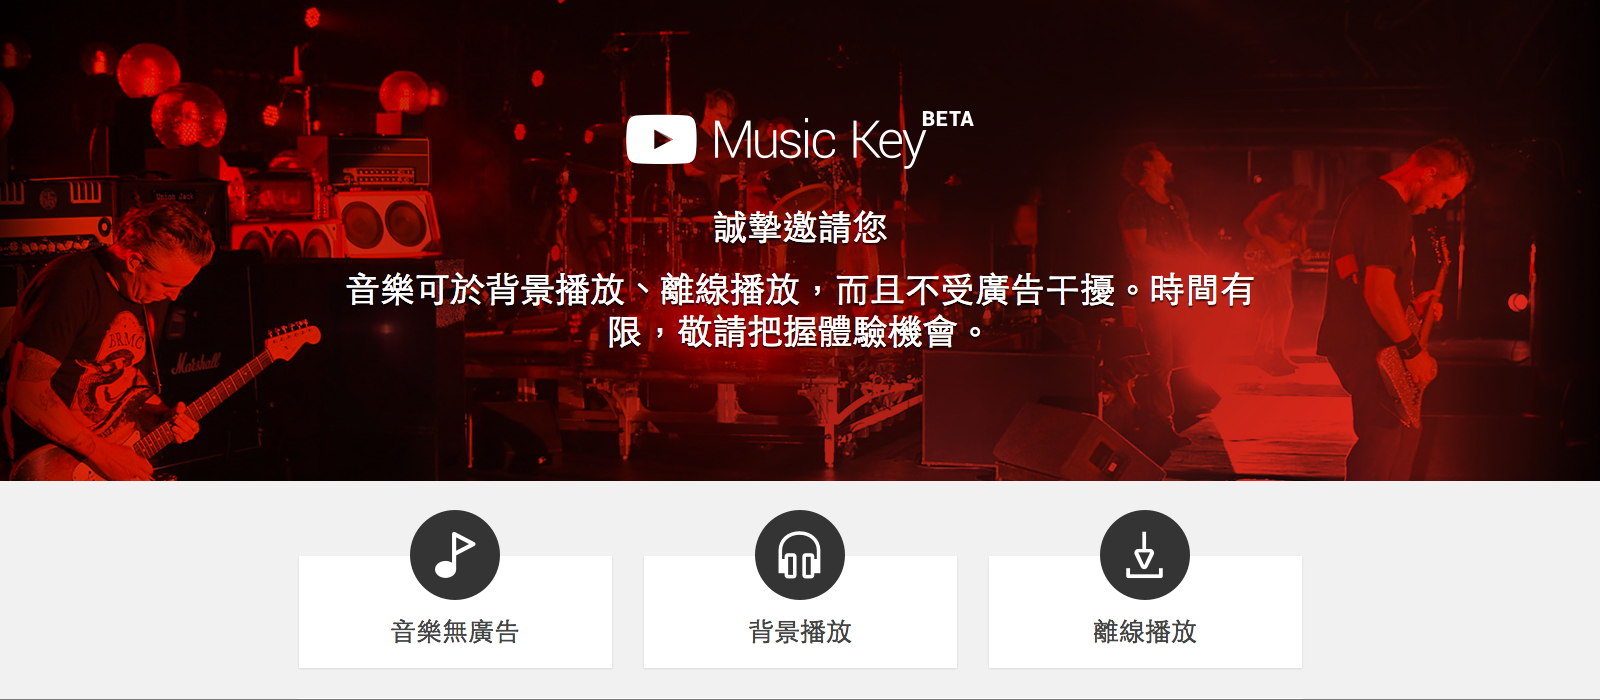 Music Key 目前尚未於台灣進行 Beta 測試，但已經可以看到介紹網頁。